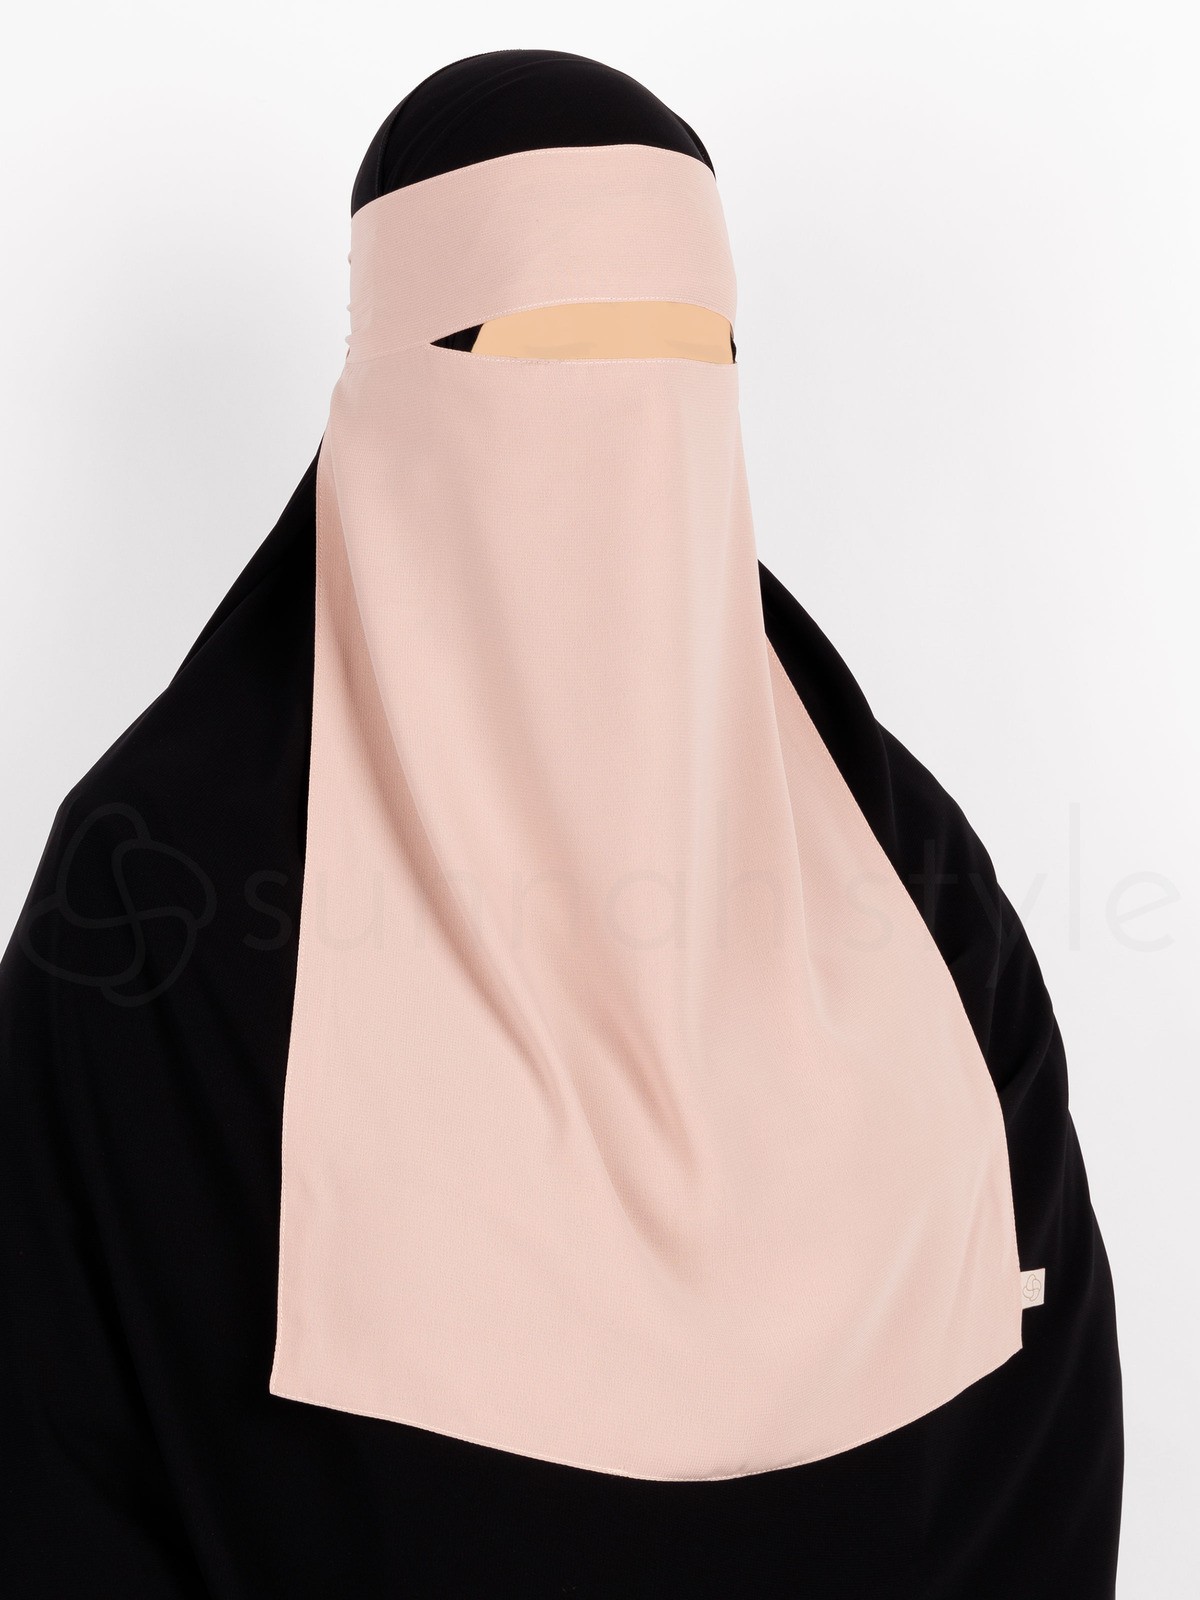 Sunnah Style - One Layer Niqab (Parfait)